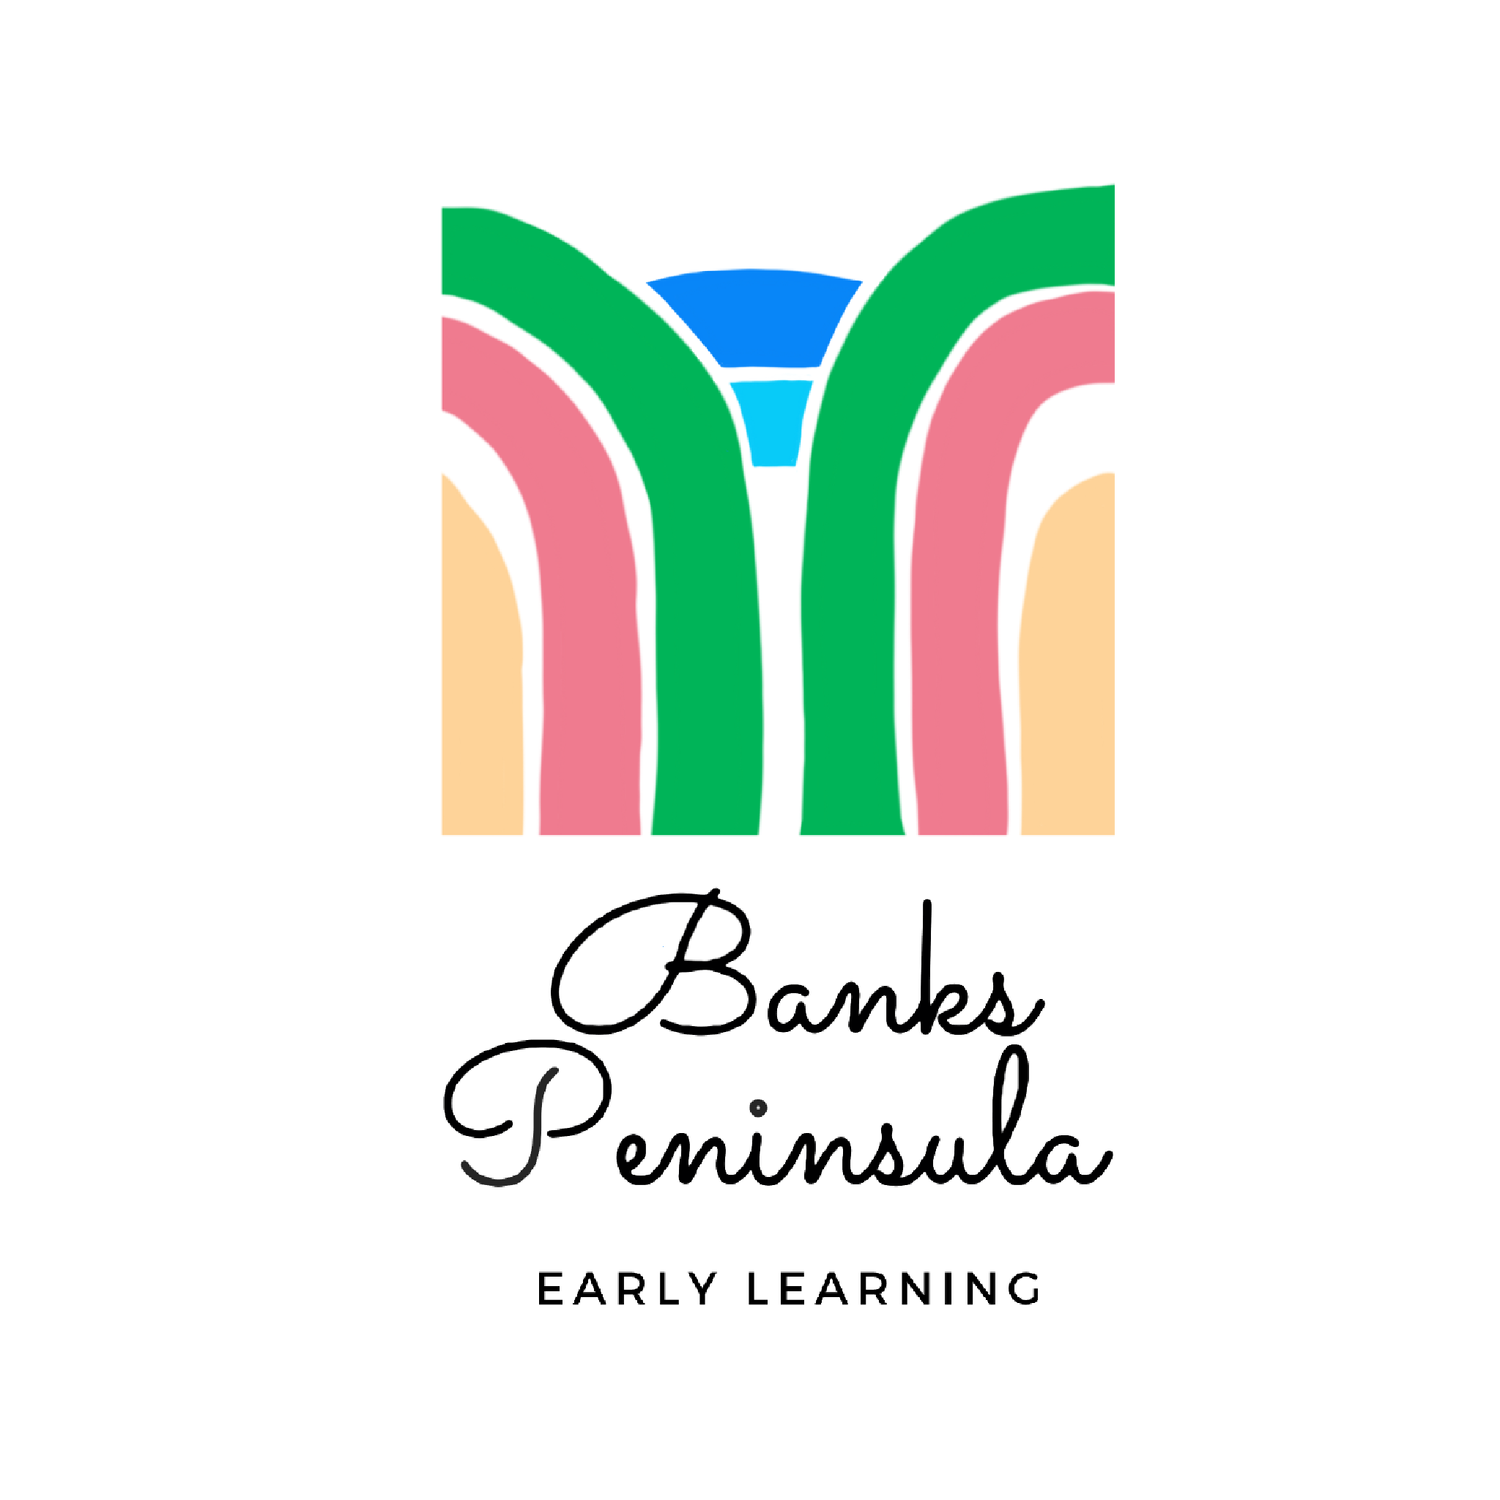 Banks Peninsula Early Learning